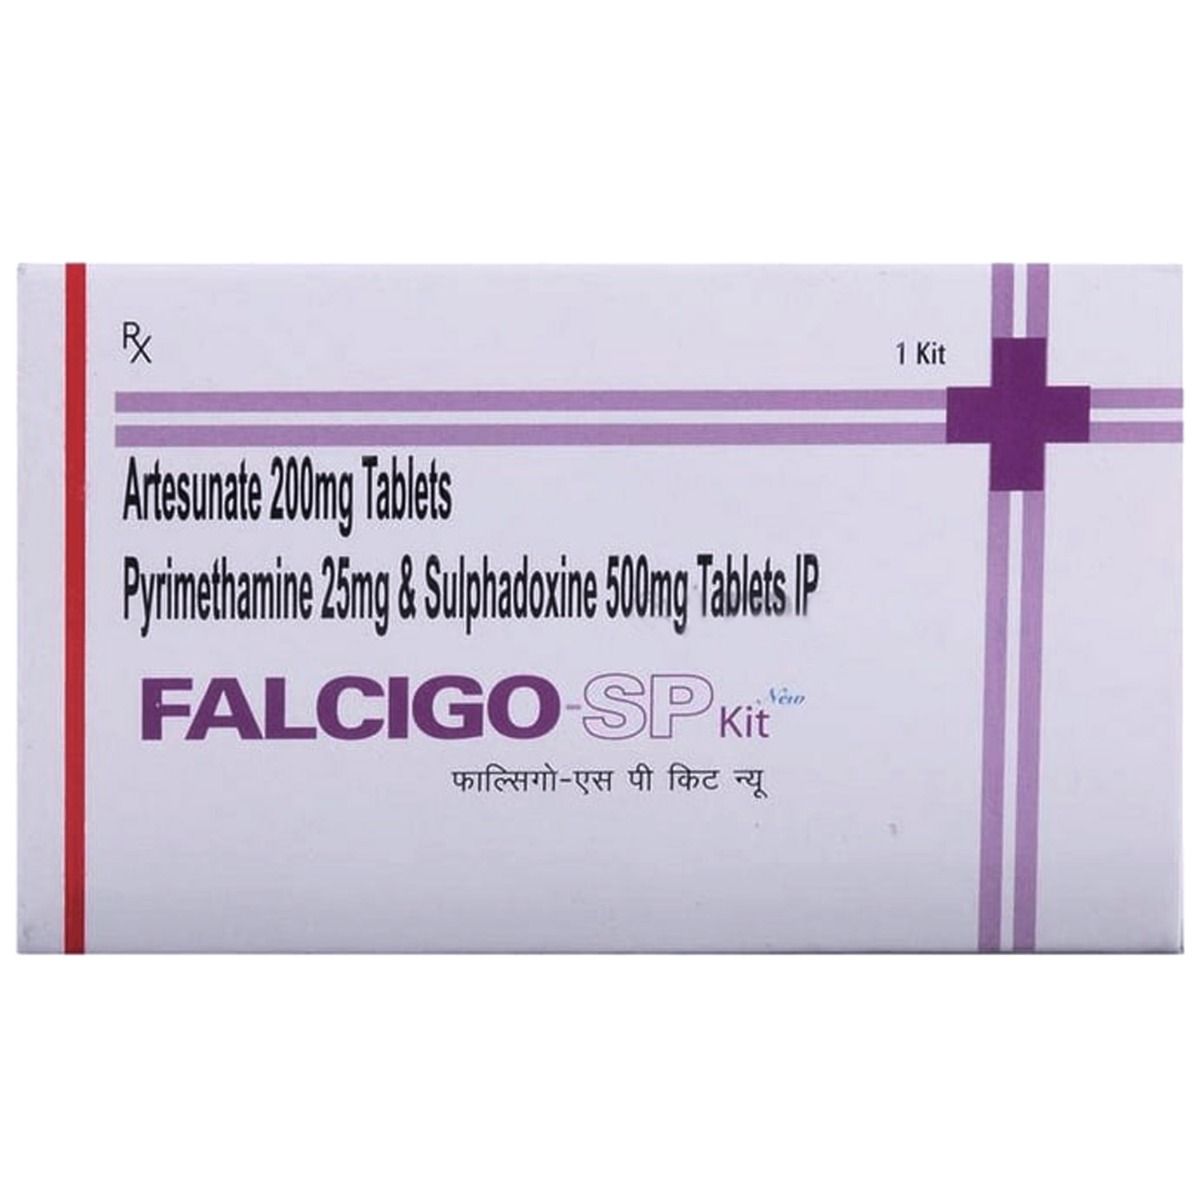 Buy Falcigo-SP Kit Online